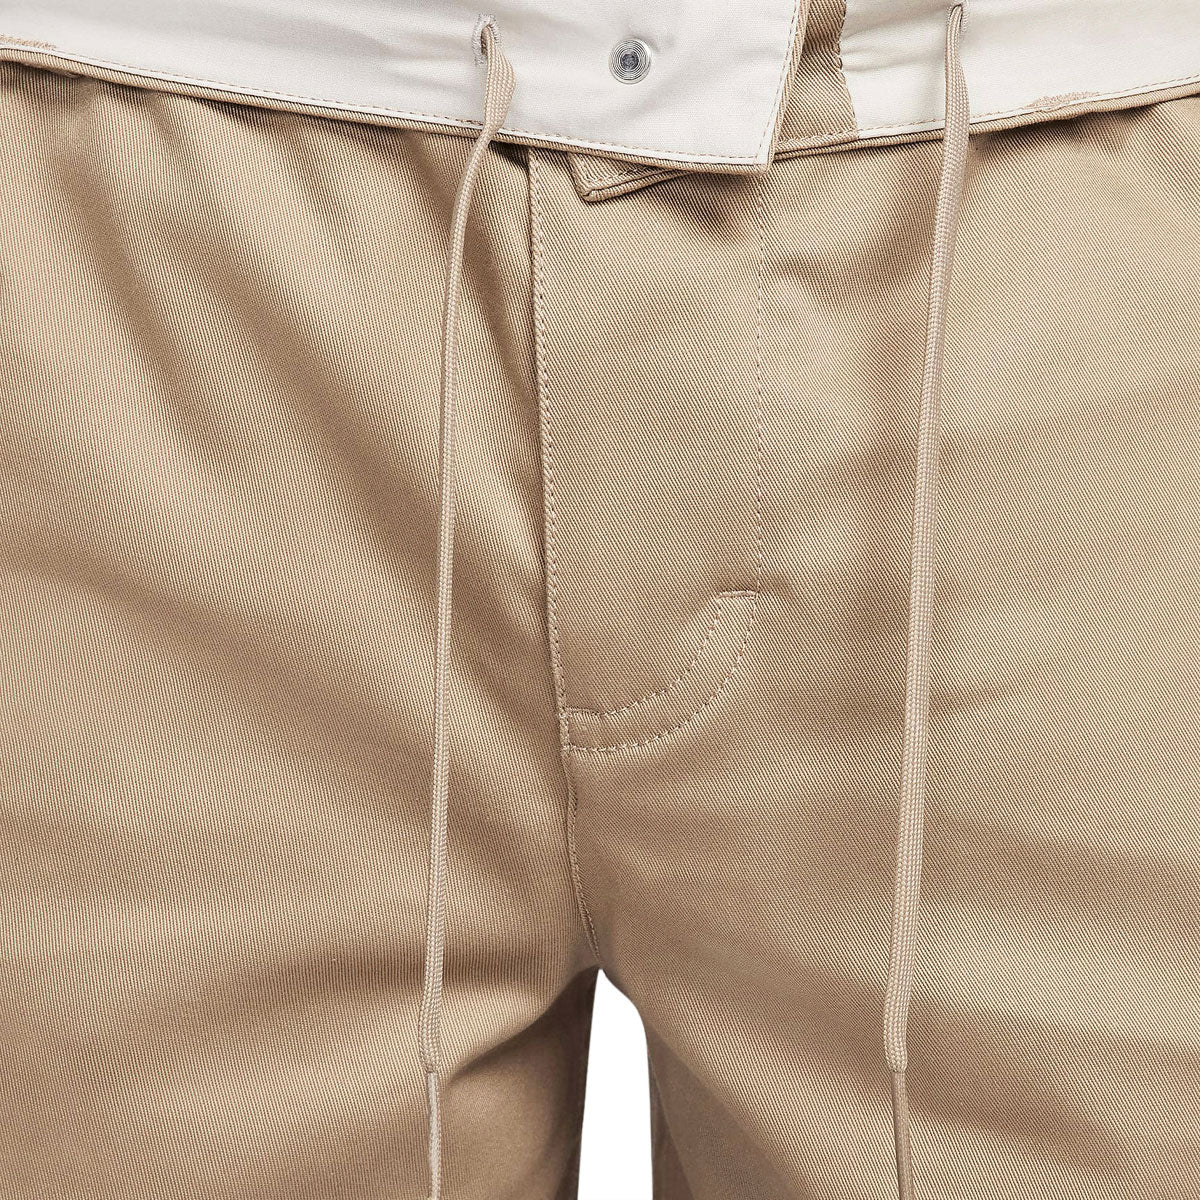 Nike El Chino Shorts - Khaki image 4